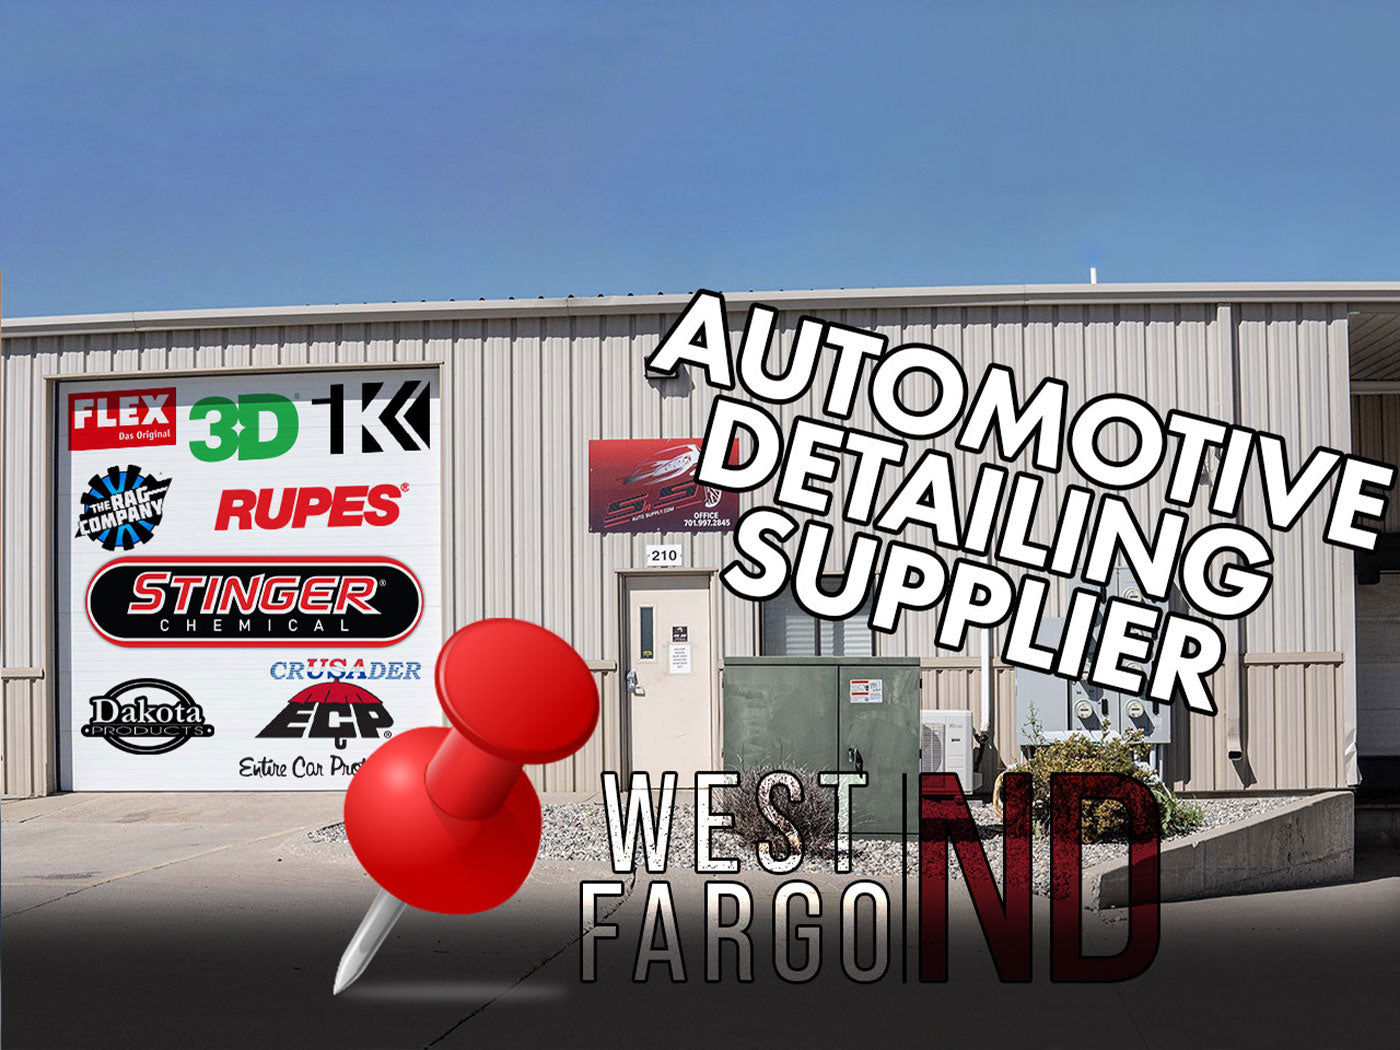 car-detailing-supplies-west-fargo-nd